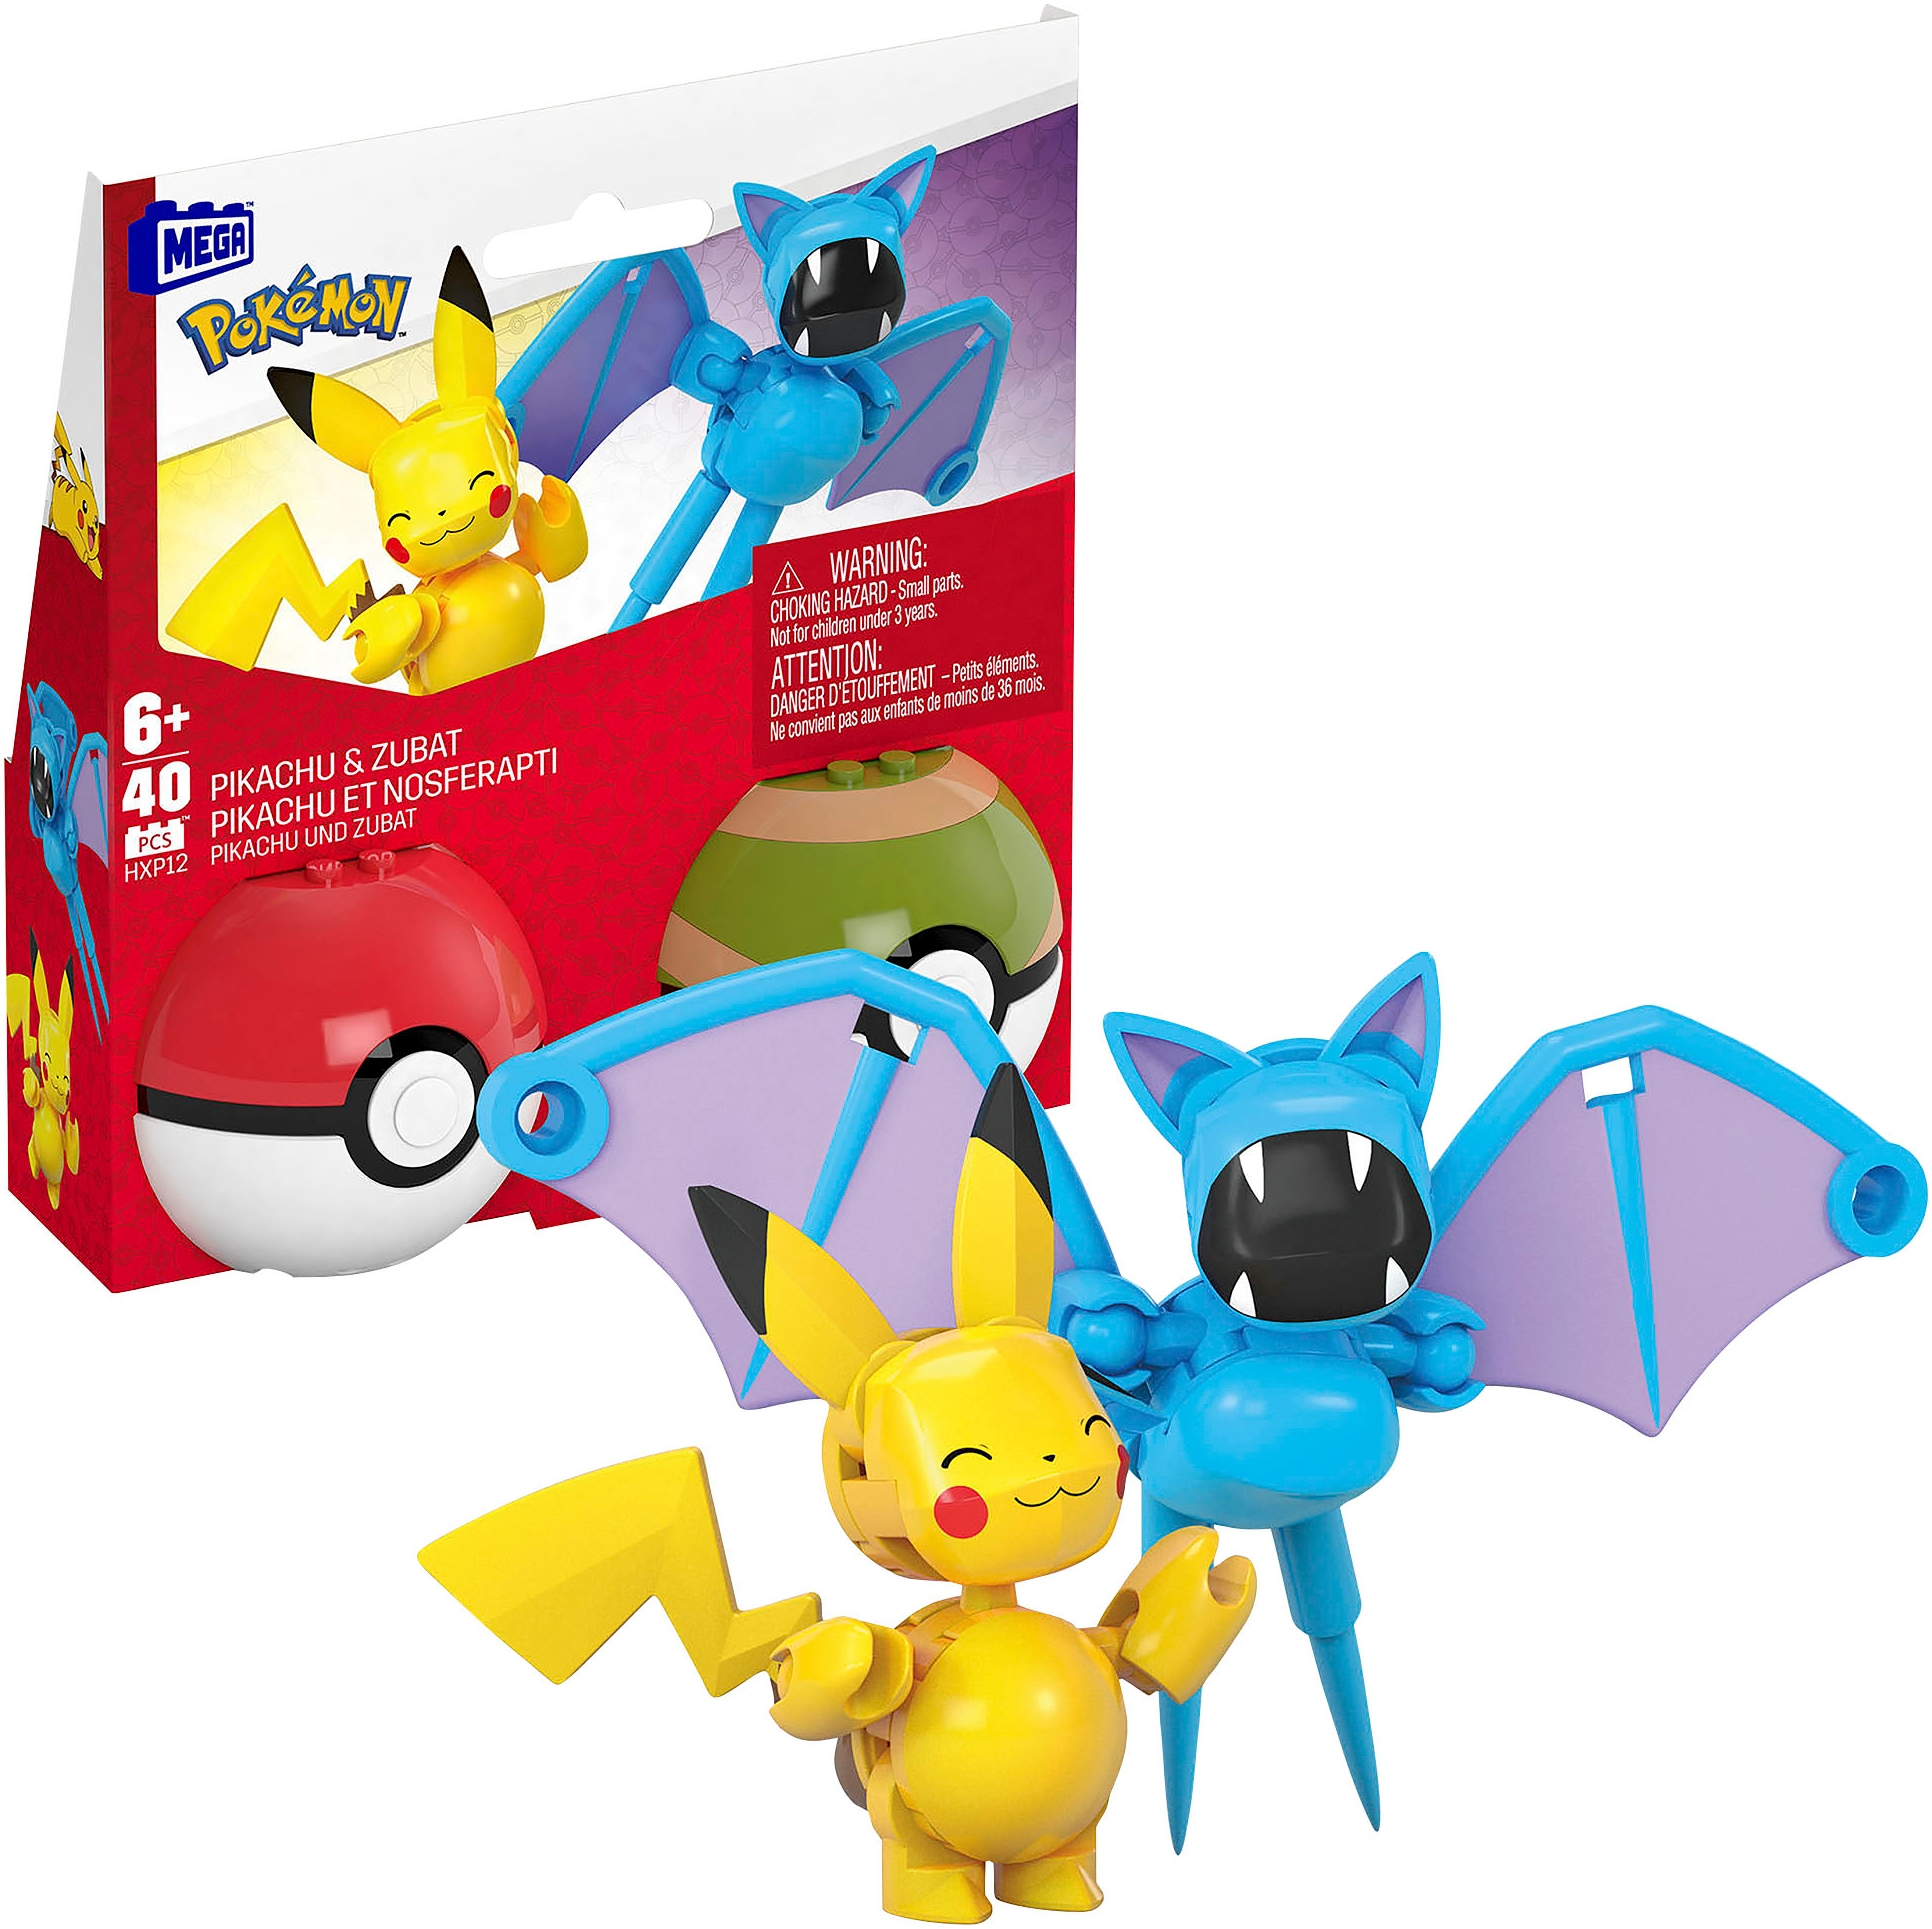 Konstruktions-Spielset »MEGA Pokémon, Pikachu und Zubat«